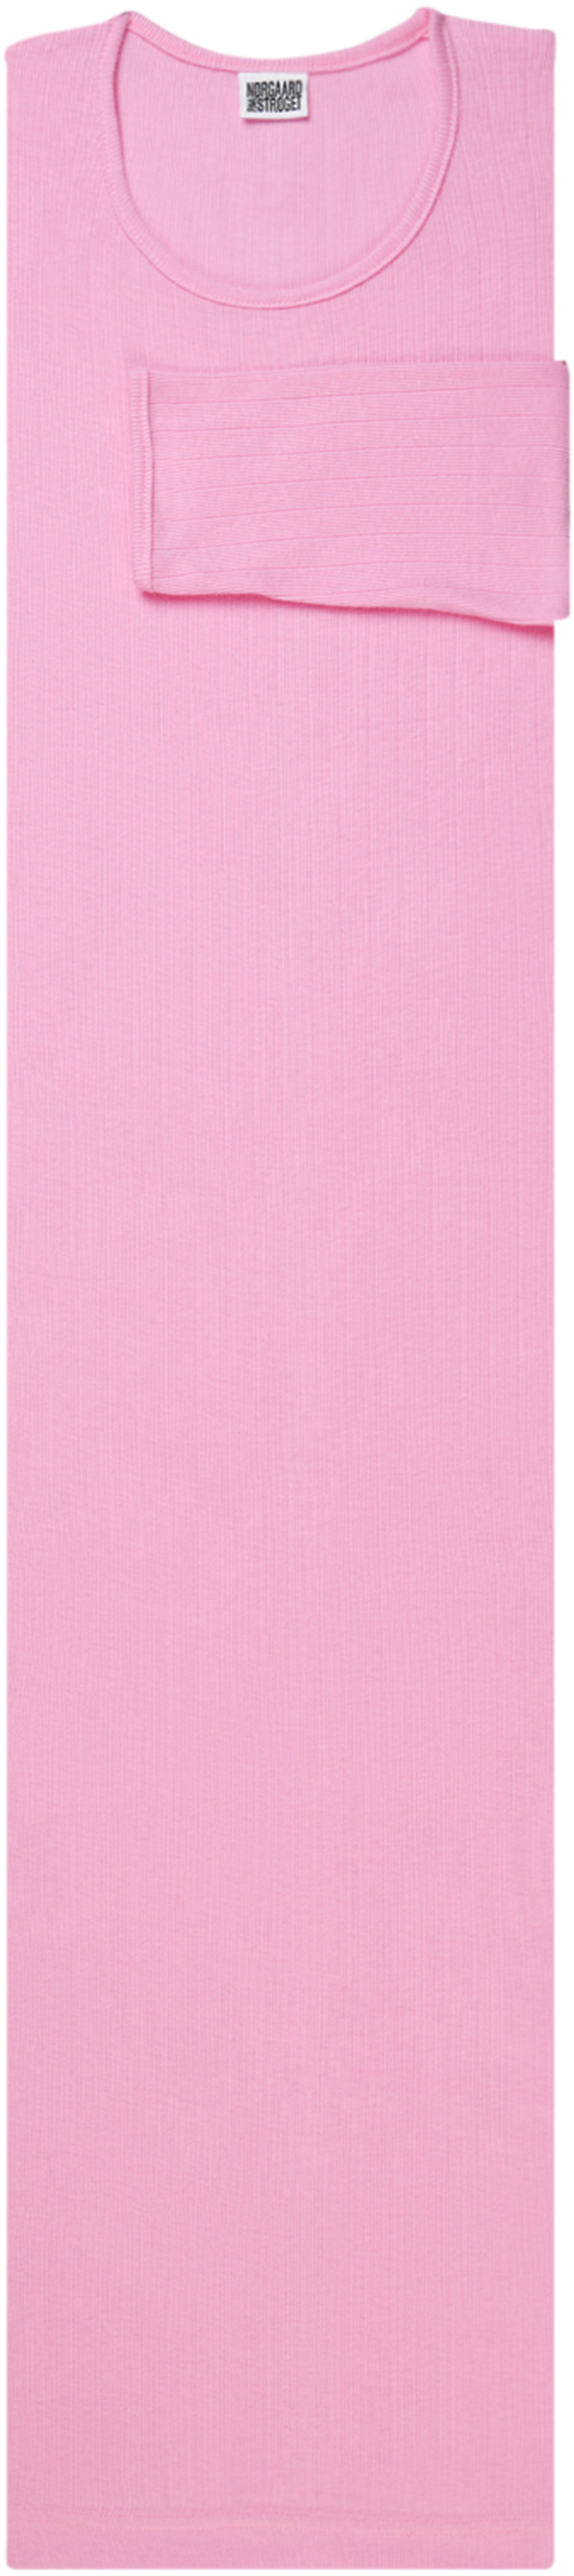 NPS John Dress Solid Colour, Light pink